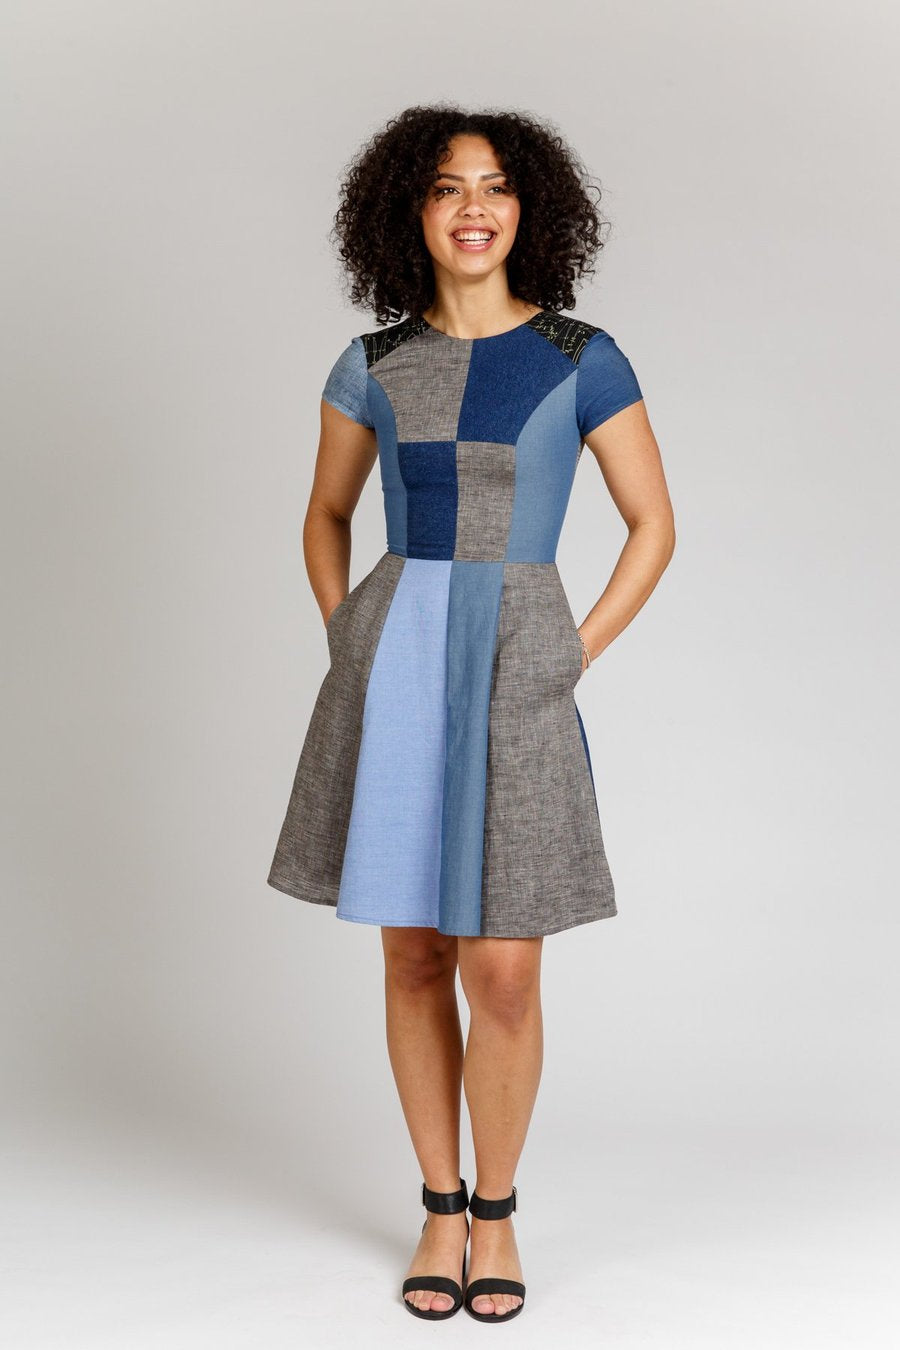 Karri dress pattern- Megan Nielsen